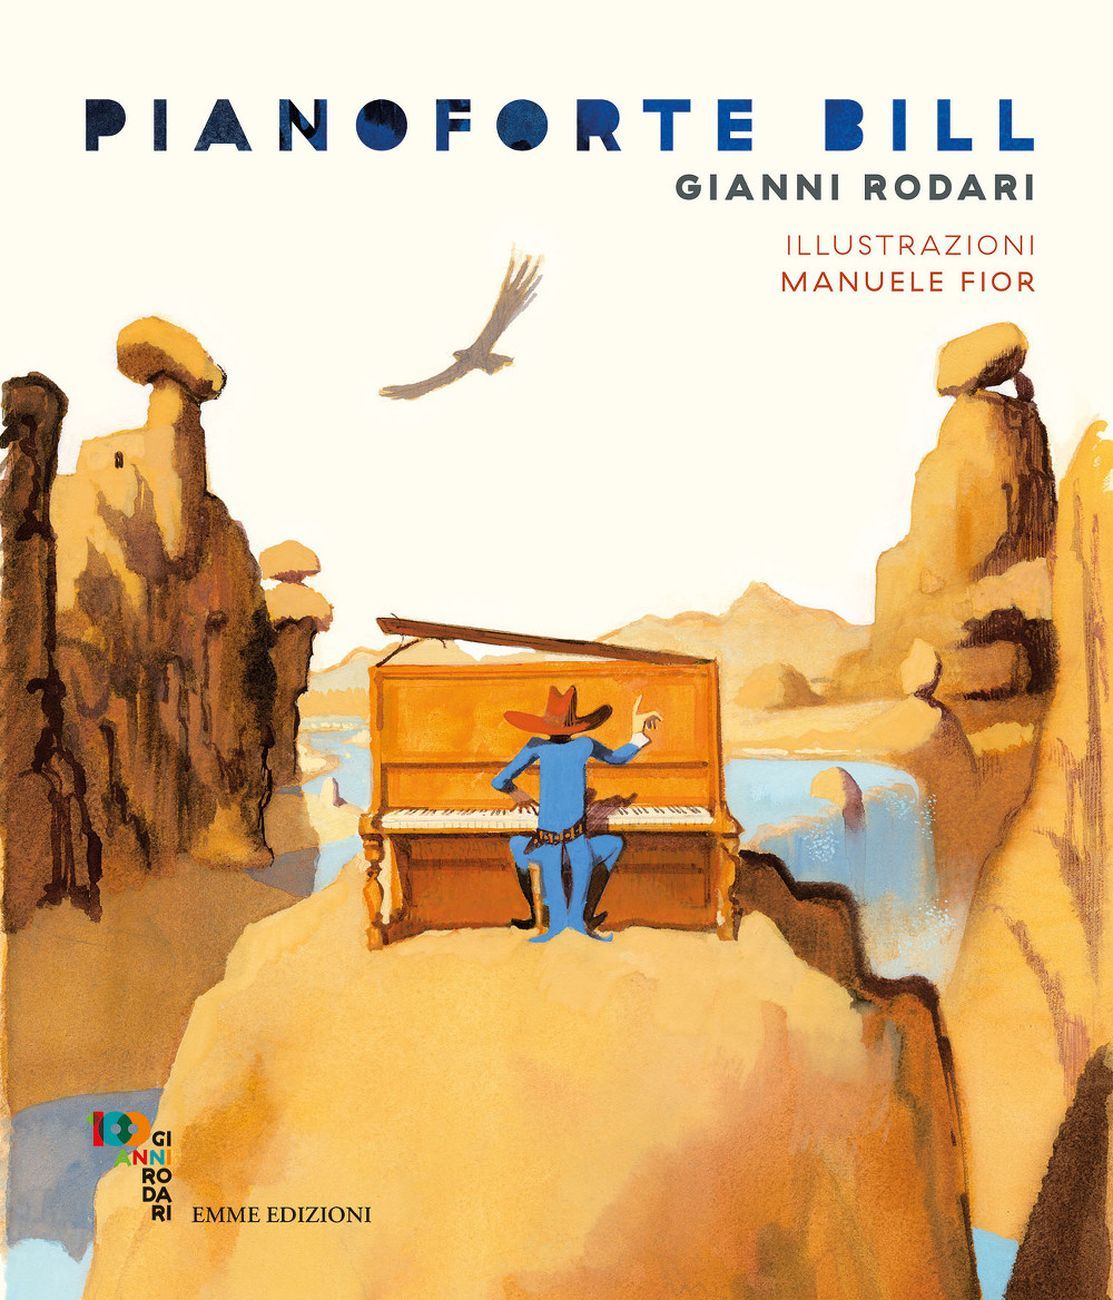 Gianni Rodari & Manuele Fior – Pianoforte Bill (Emme Edizioni, Milano 2020)